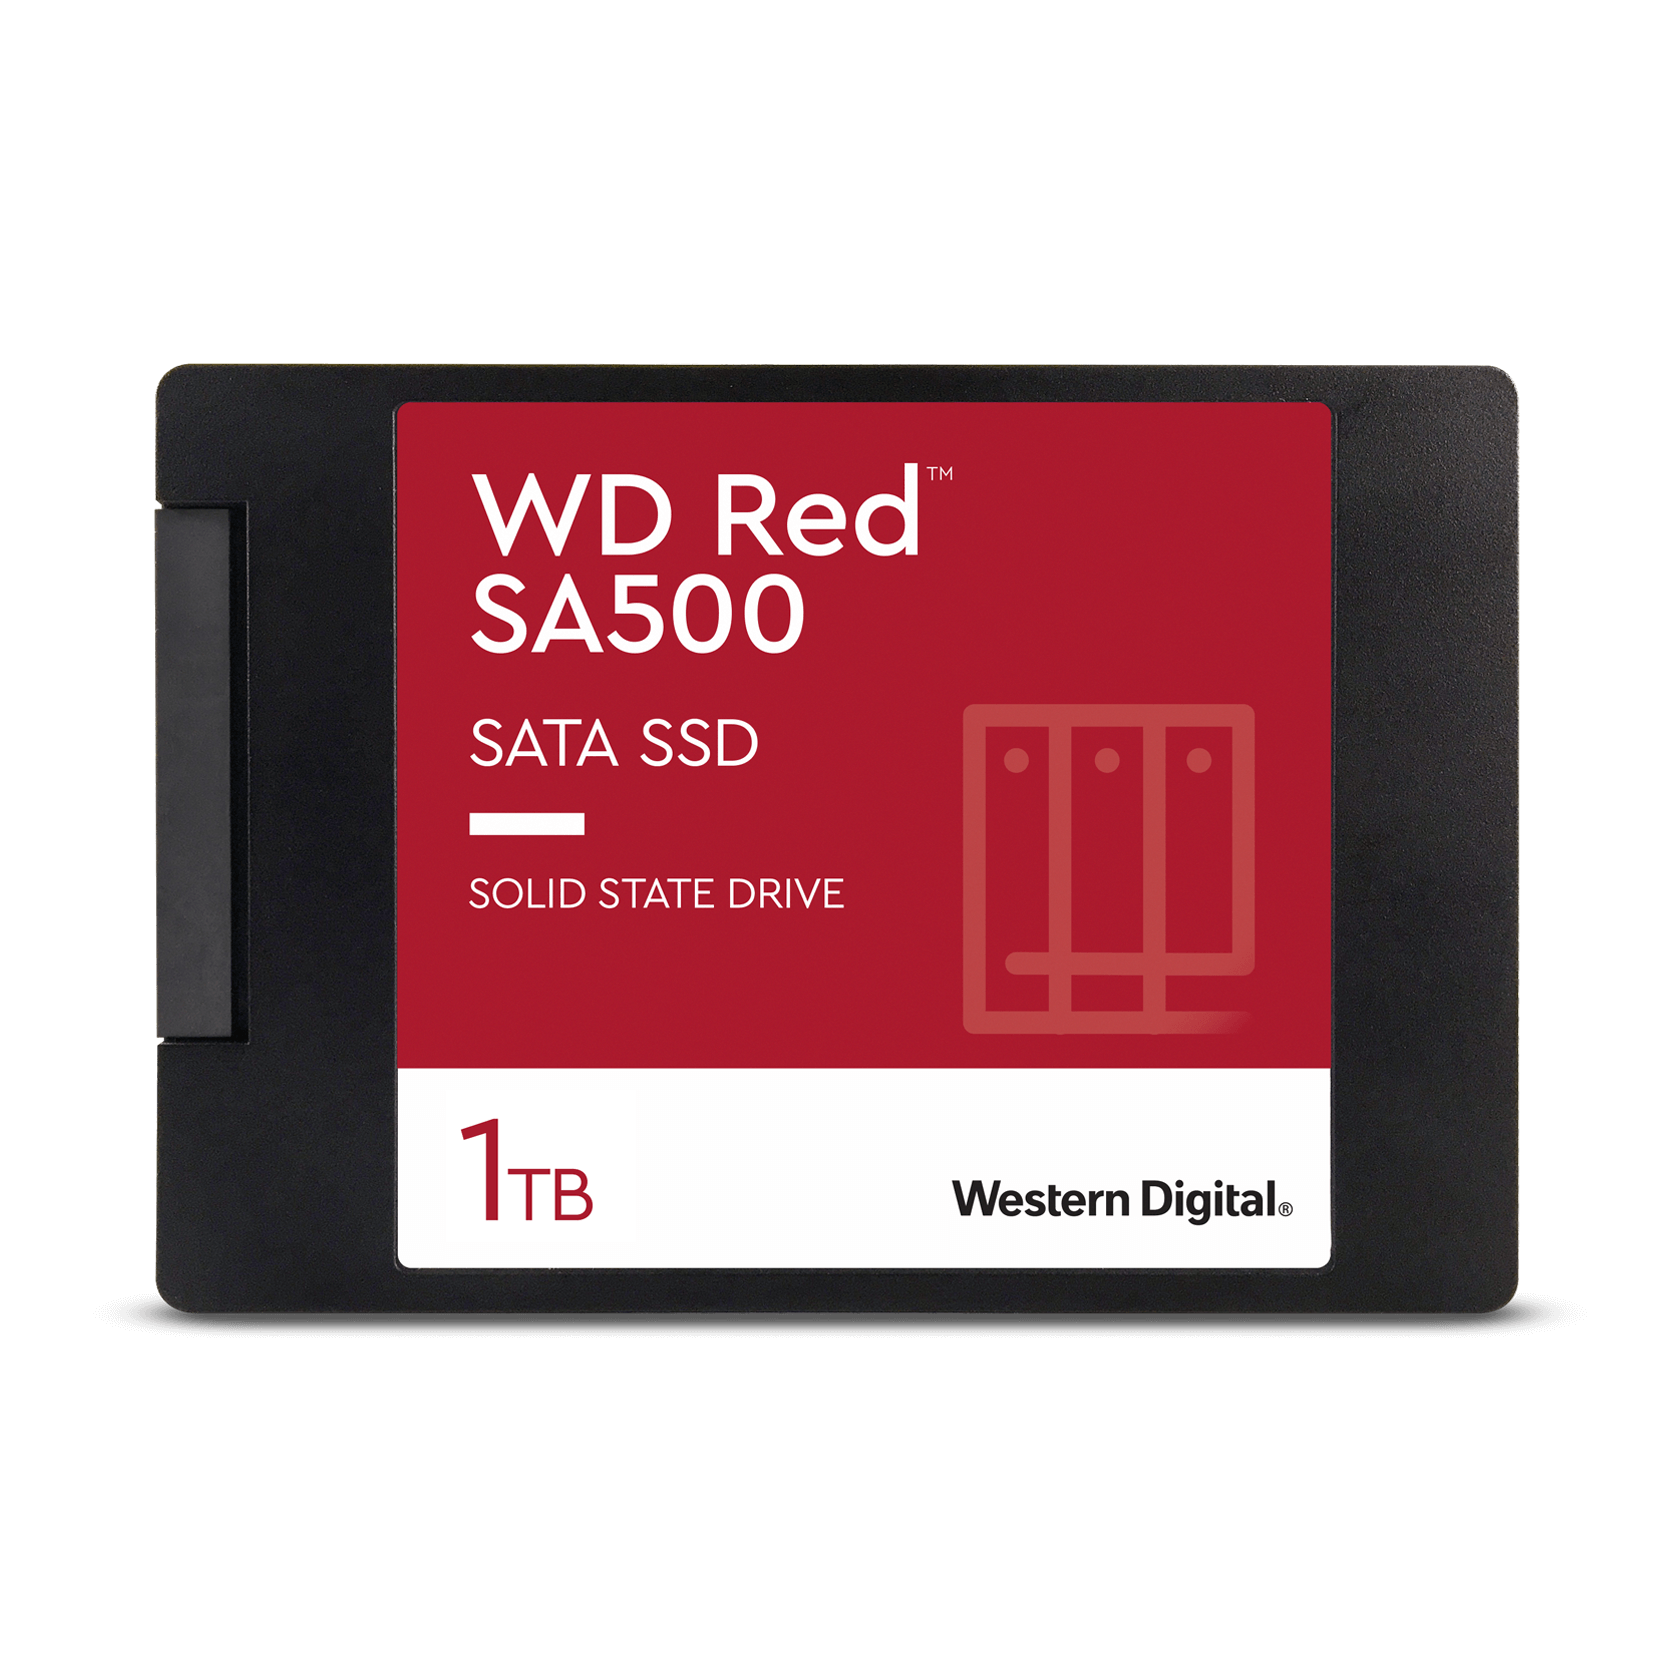 Western Digital 1TB WD SA500 NAS SATA, Red - WDS100T1R0A